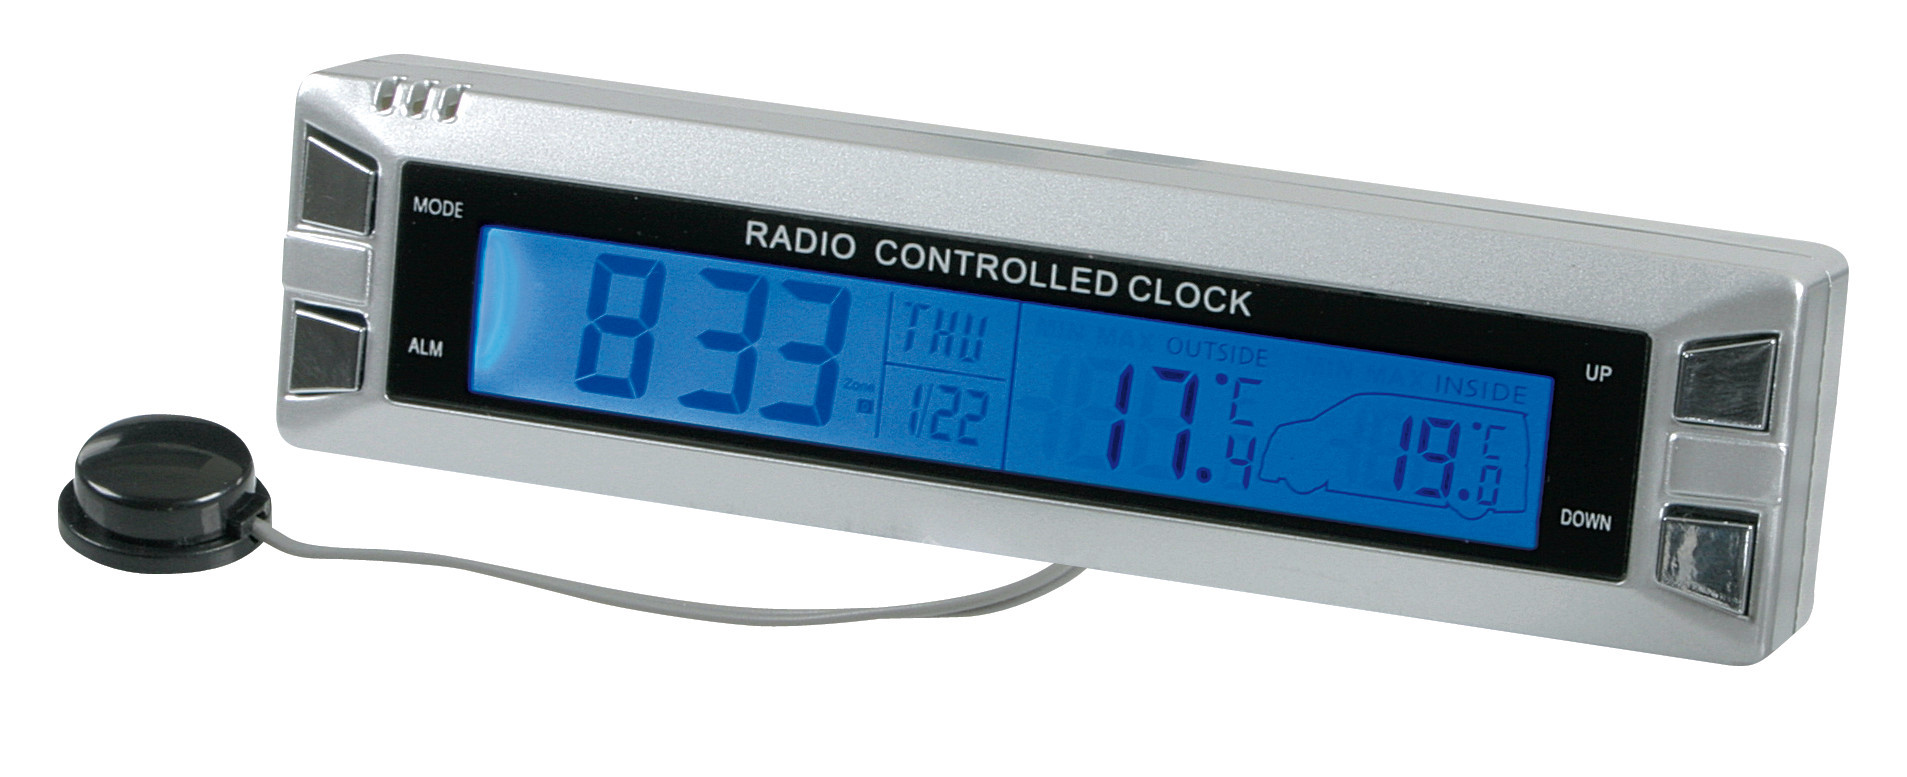 Termometru int-ext Seyio R-30 ceas radio control 12/24V thumb